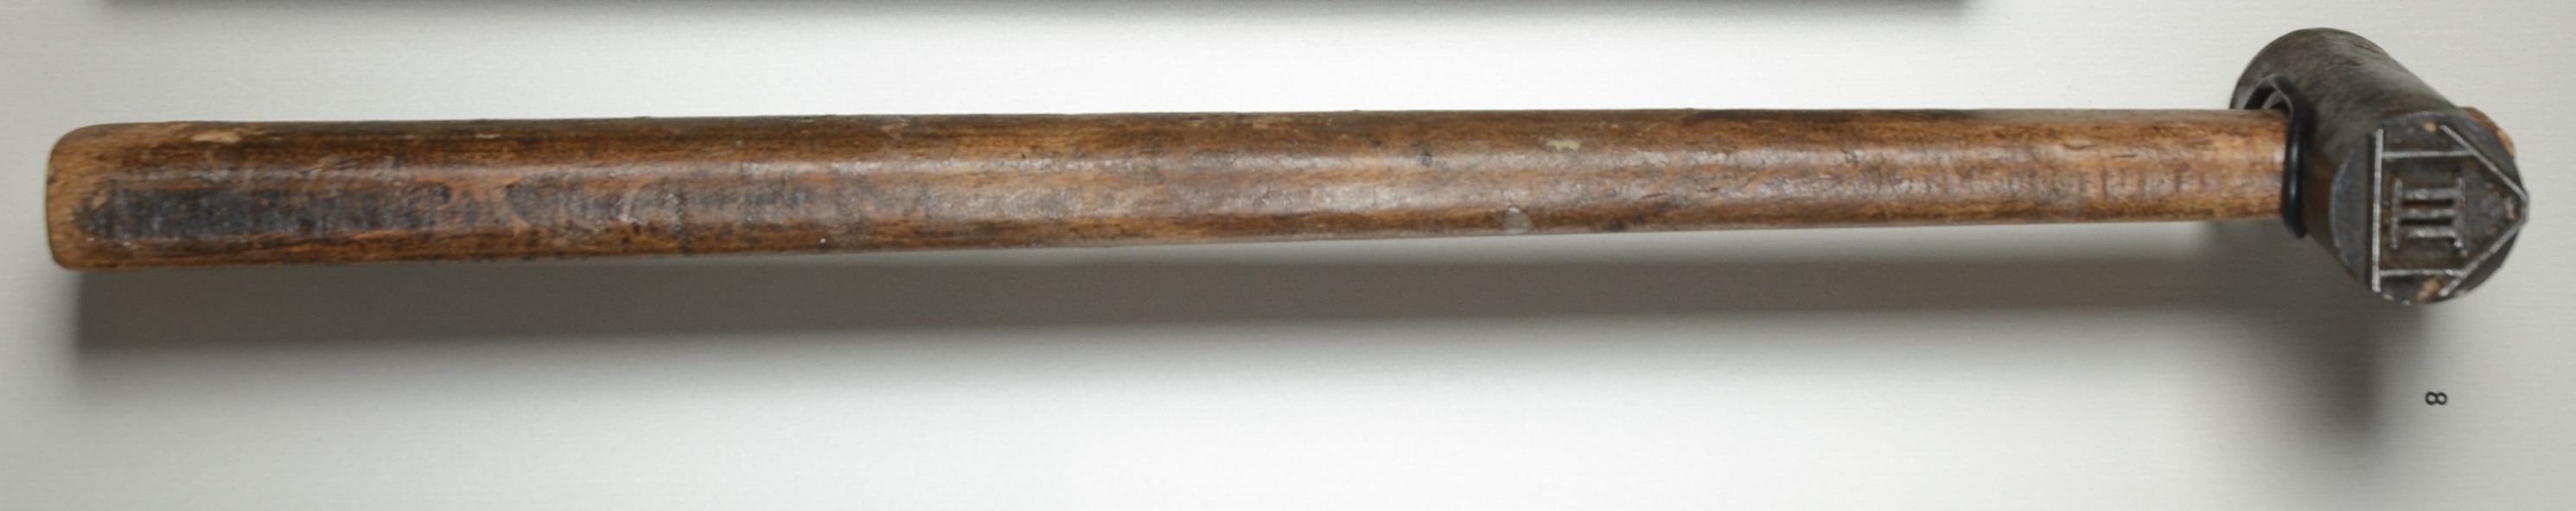 Hammer mit Siegel (Siegelhammer) (Museum Niesky Forum Konrad-Wachsmann-Haus CC BY-NC-ND)